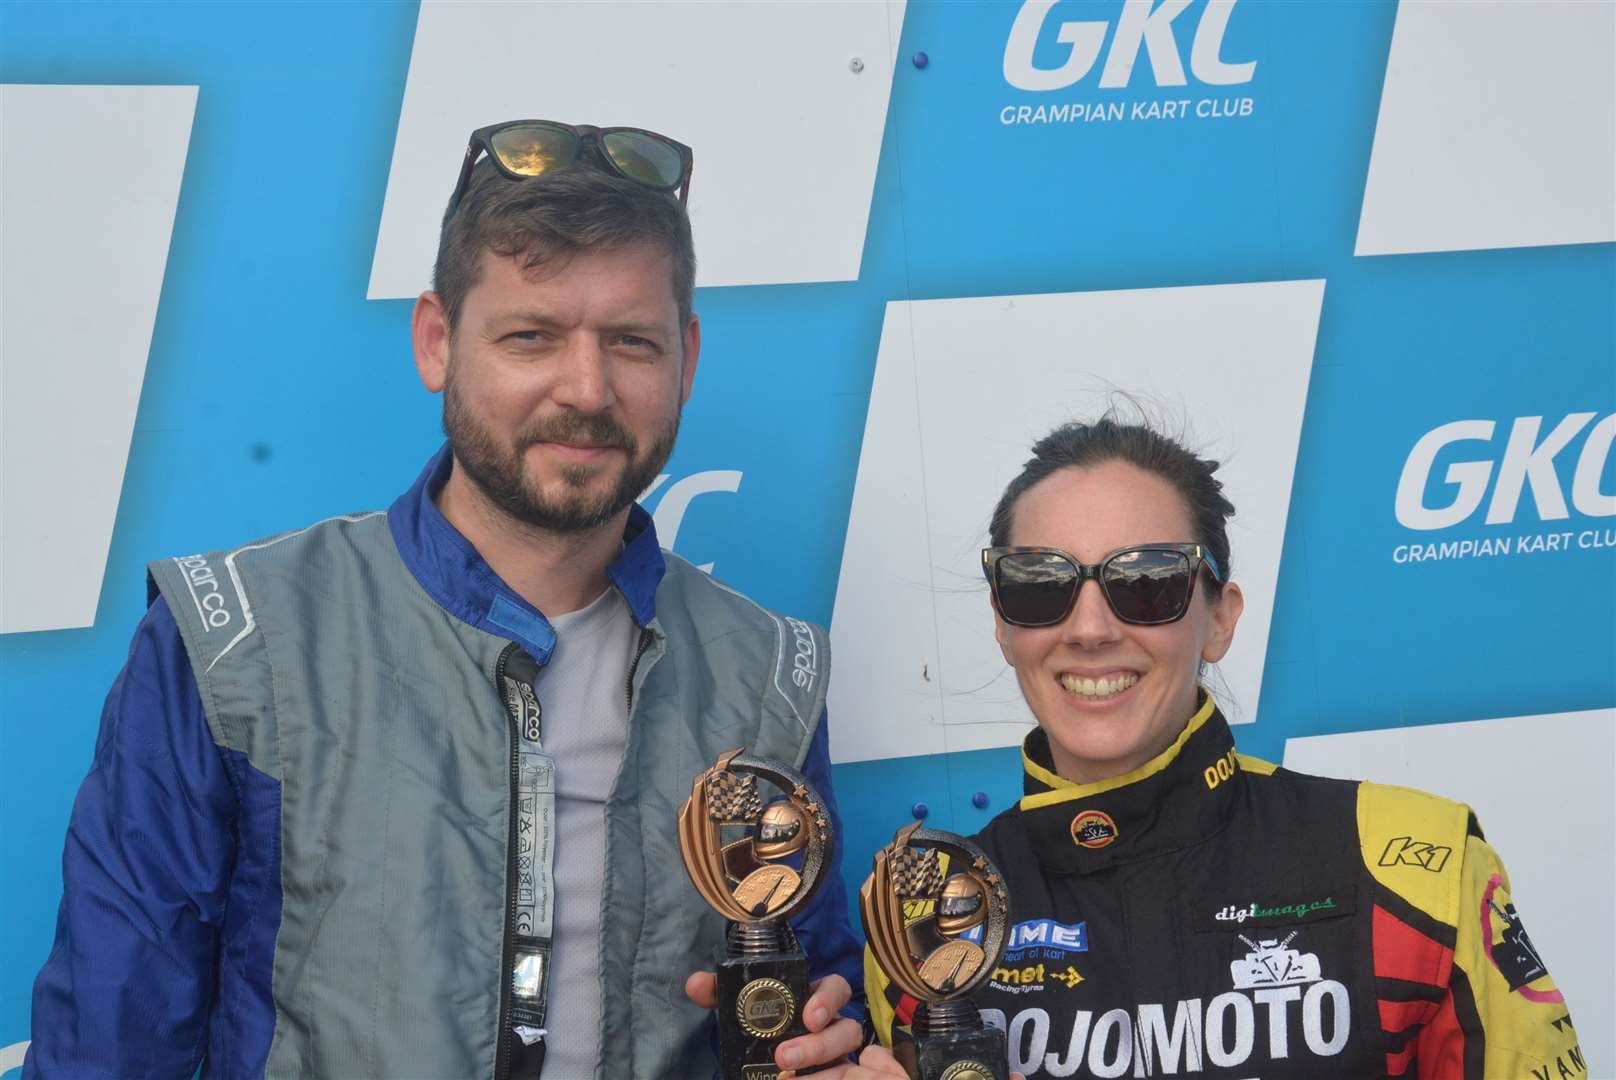 Husband and wife Olag Kazakova and Kat Kazakova each won both the prokart categories.